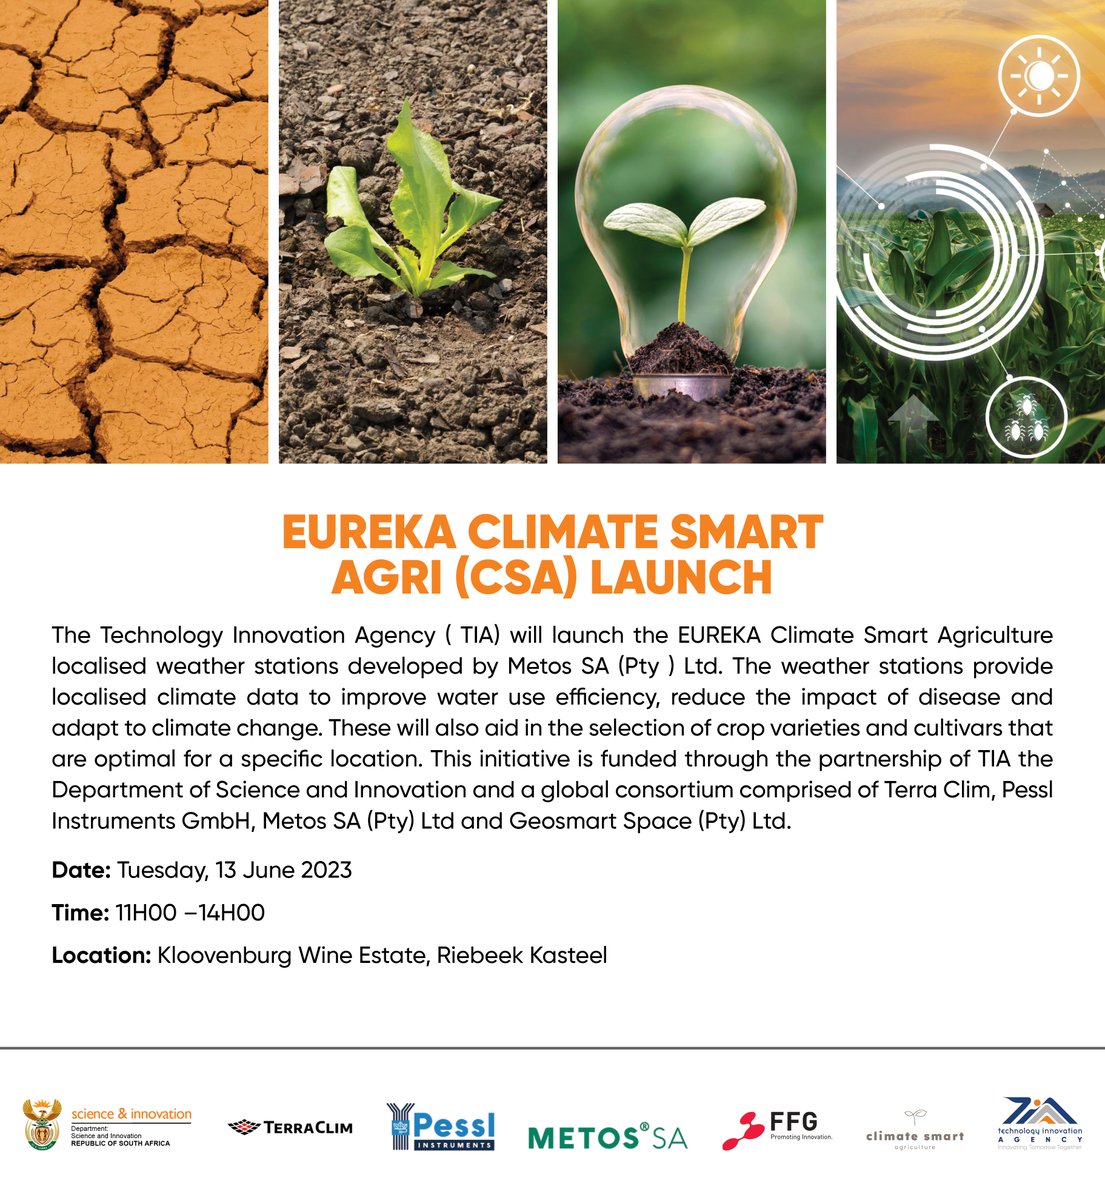 Eureka Climate Smart Agri (CSA) Launch

#DSI #TIA #Pessl #TerraClim #METOSSA #FFG #ClimateSmart